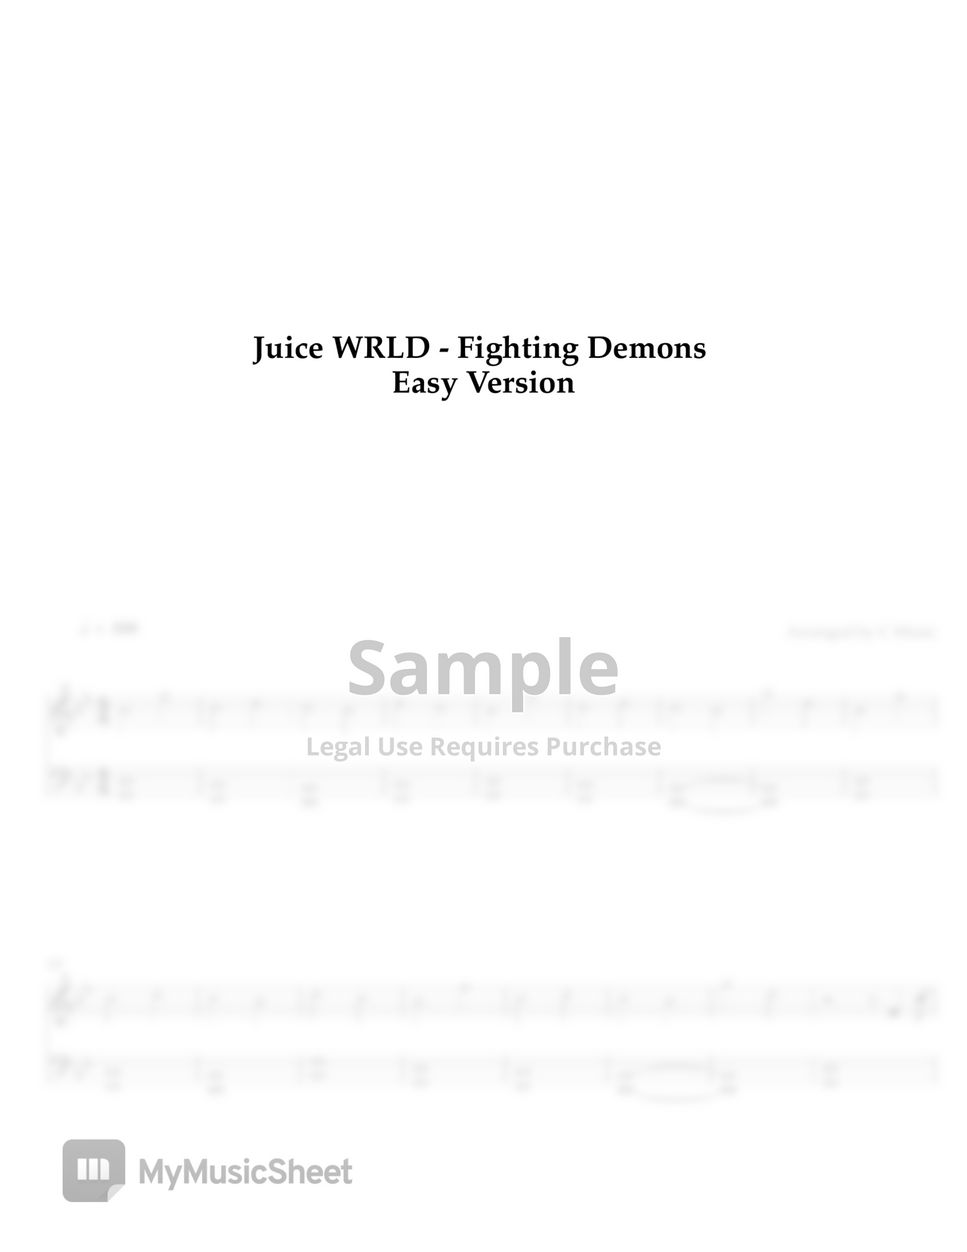 Juice WRLD - Fighting Demons (Easy Version) by C Music